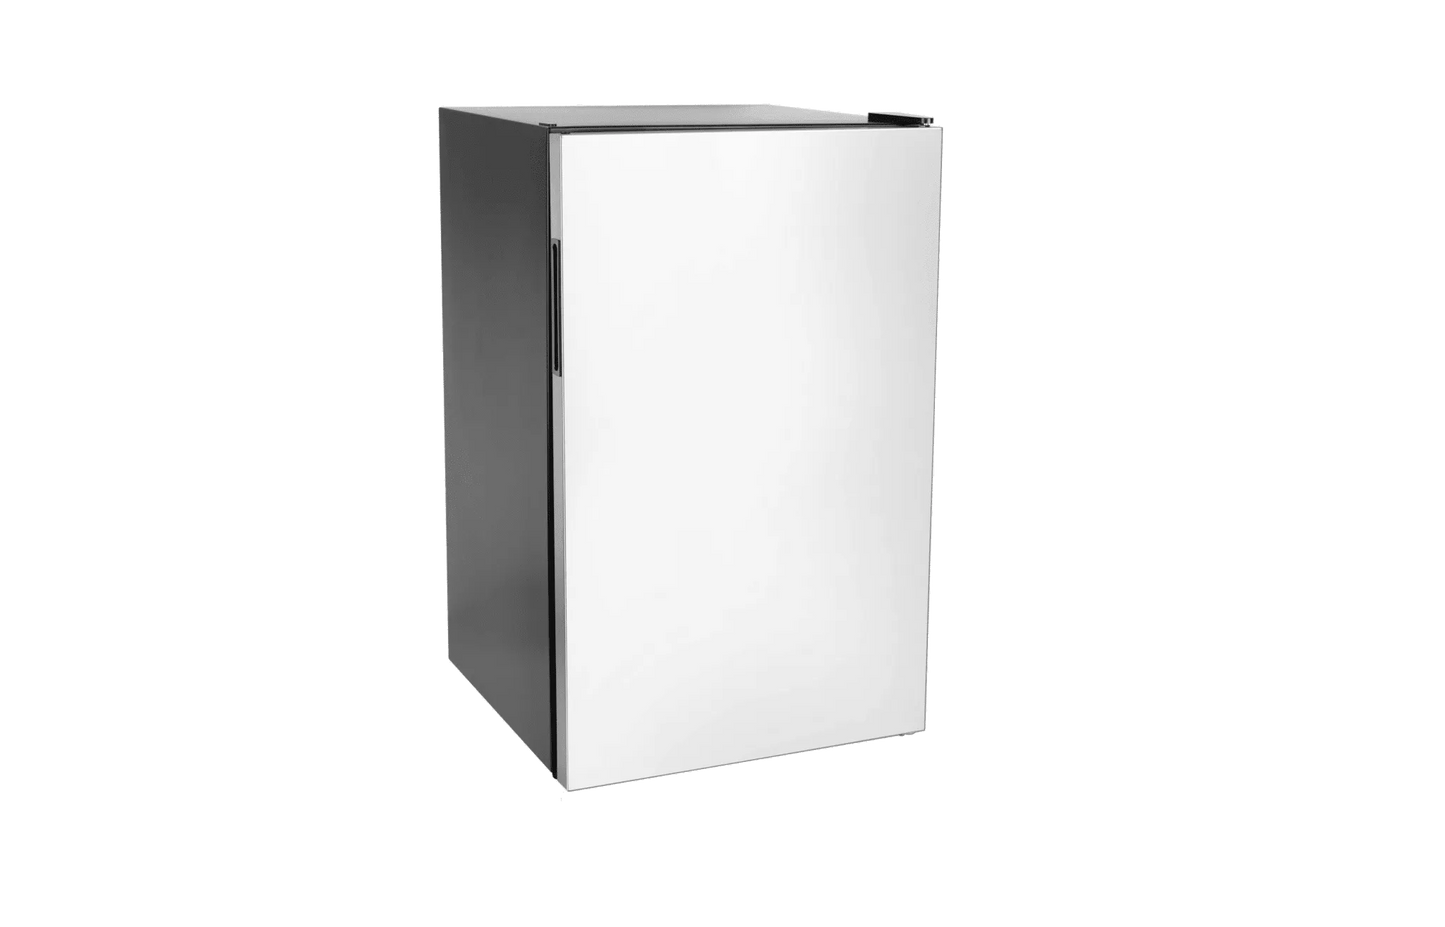 Bull - Select Contemporary Refrigerator